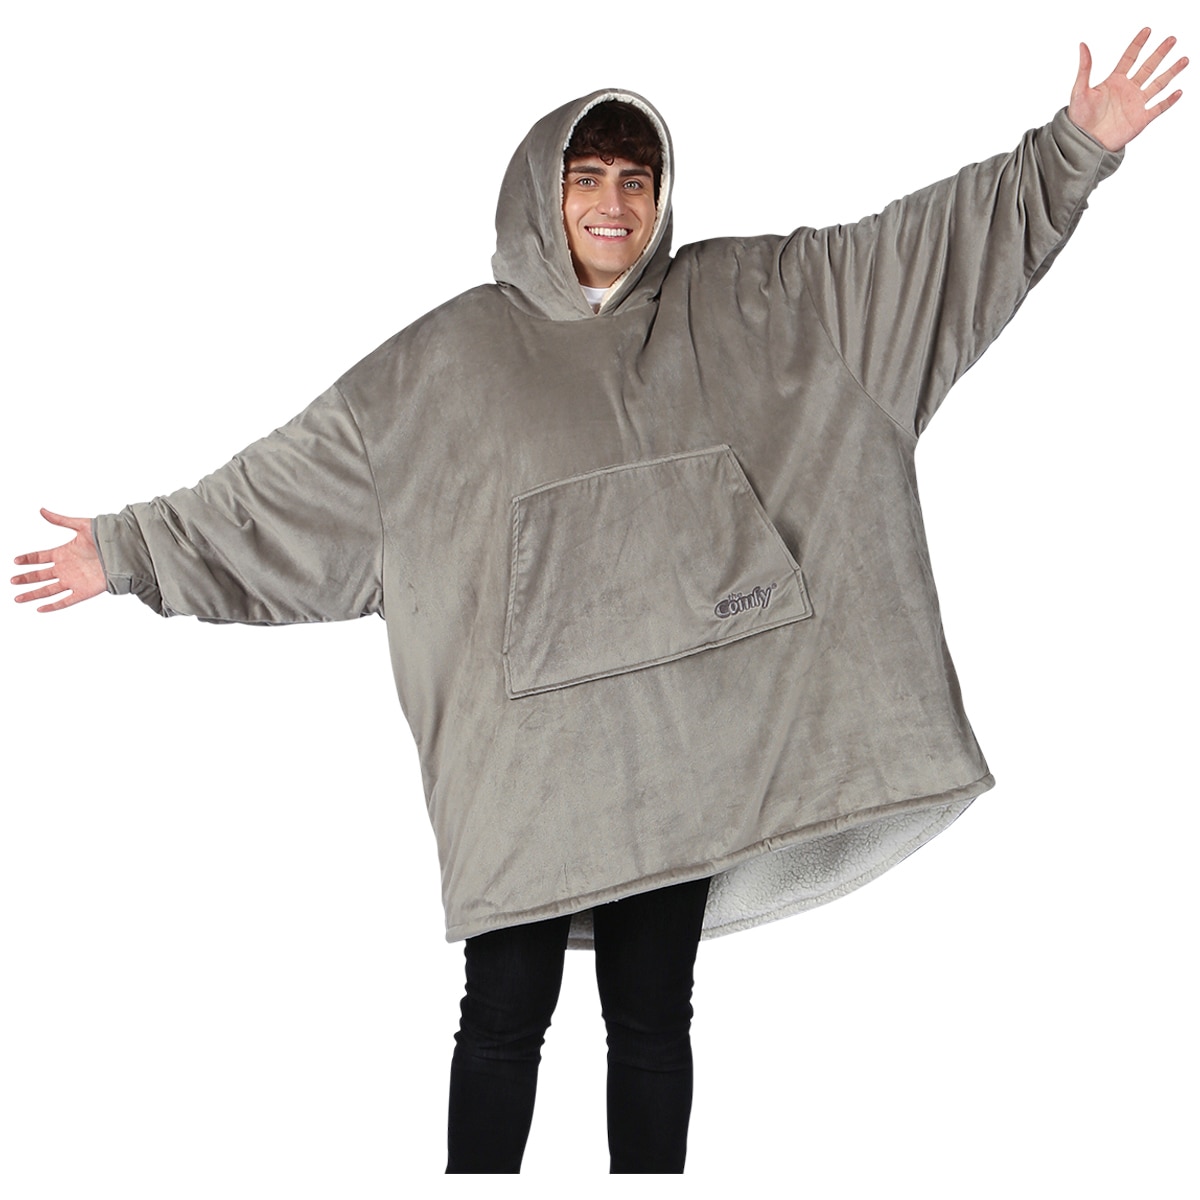 The Comfy Blanket Sweatshirt Grey